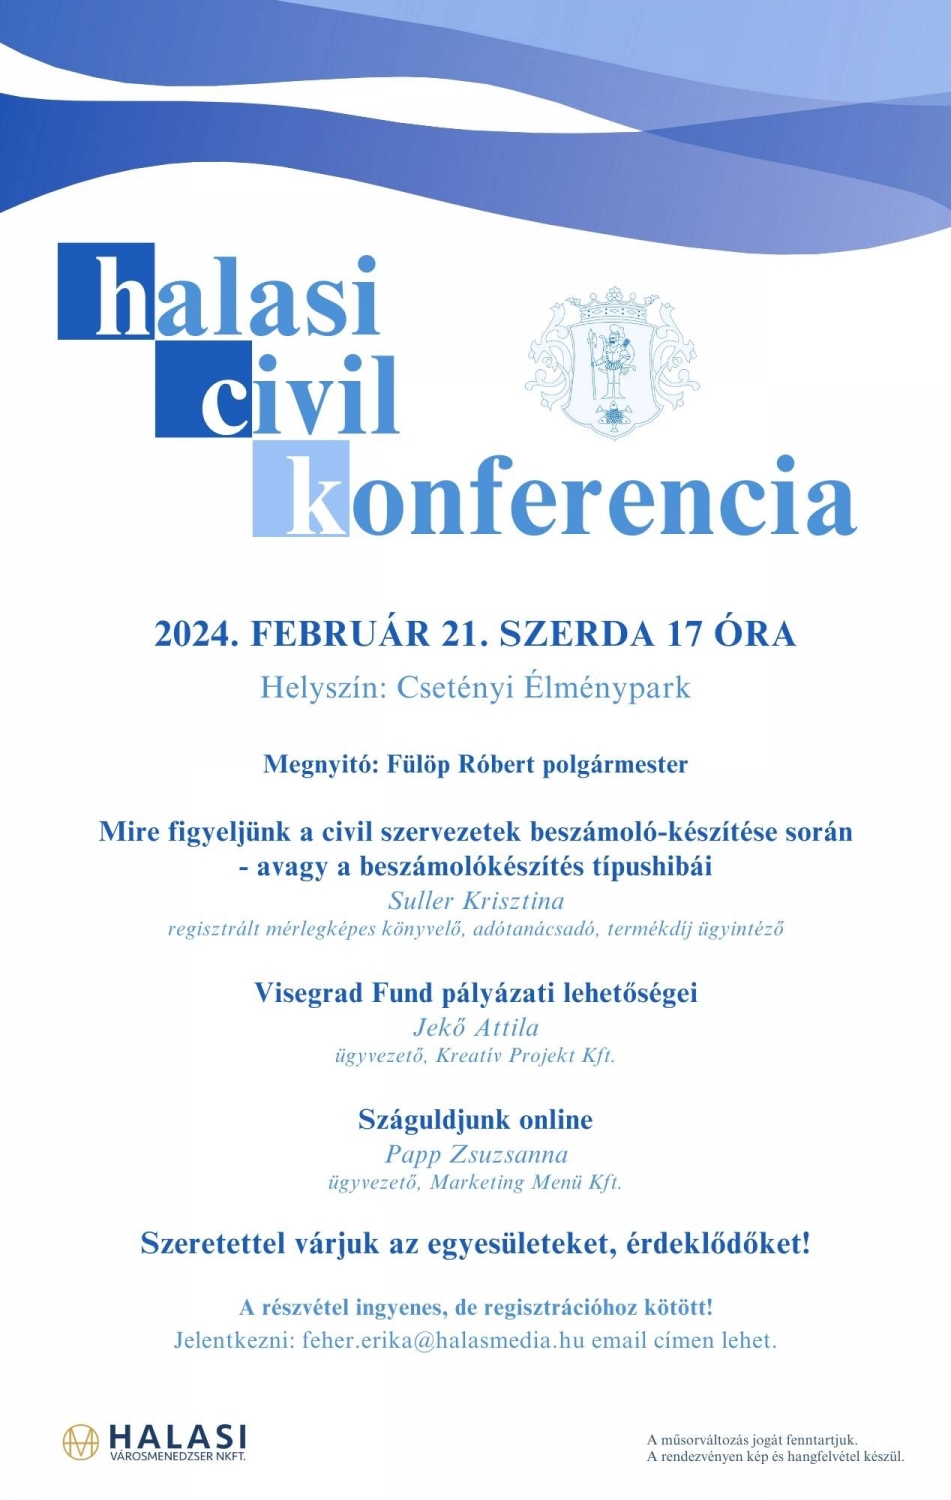 Civil konferencia